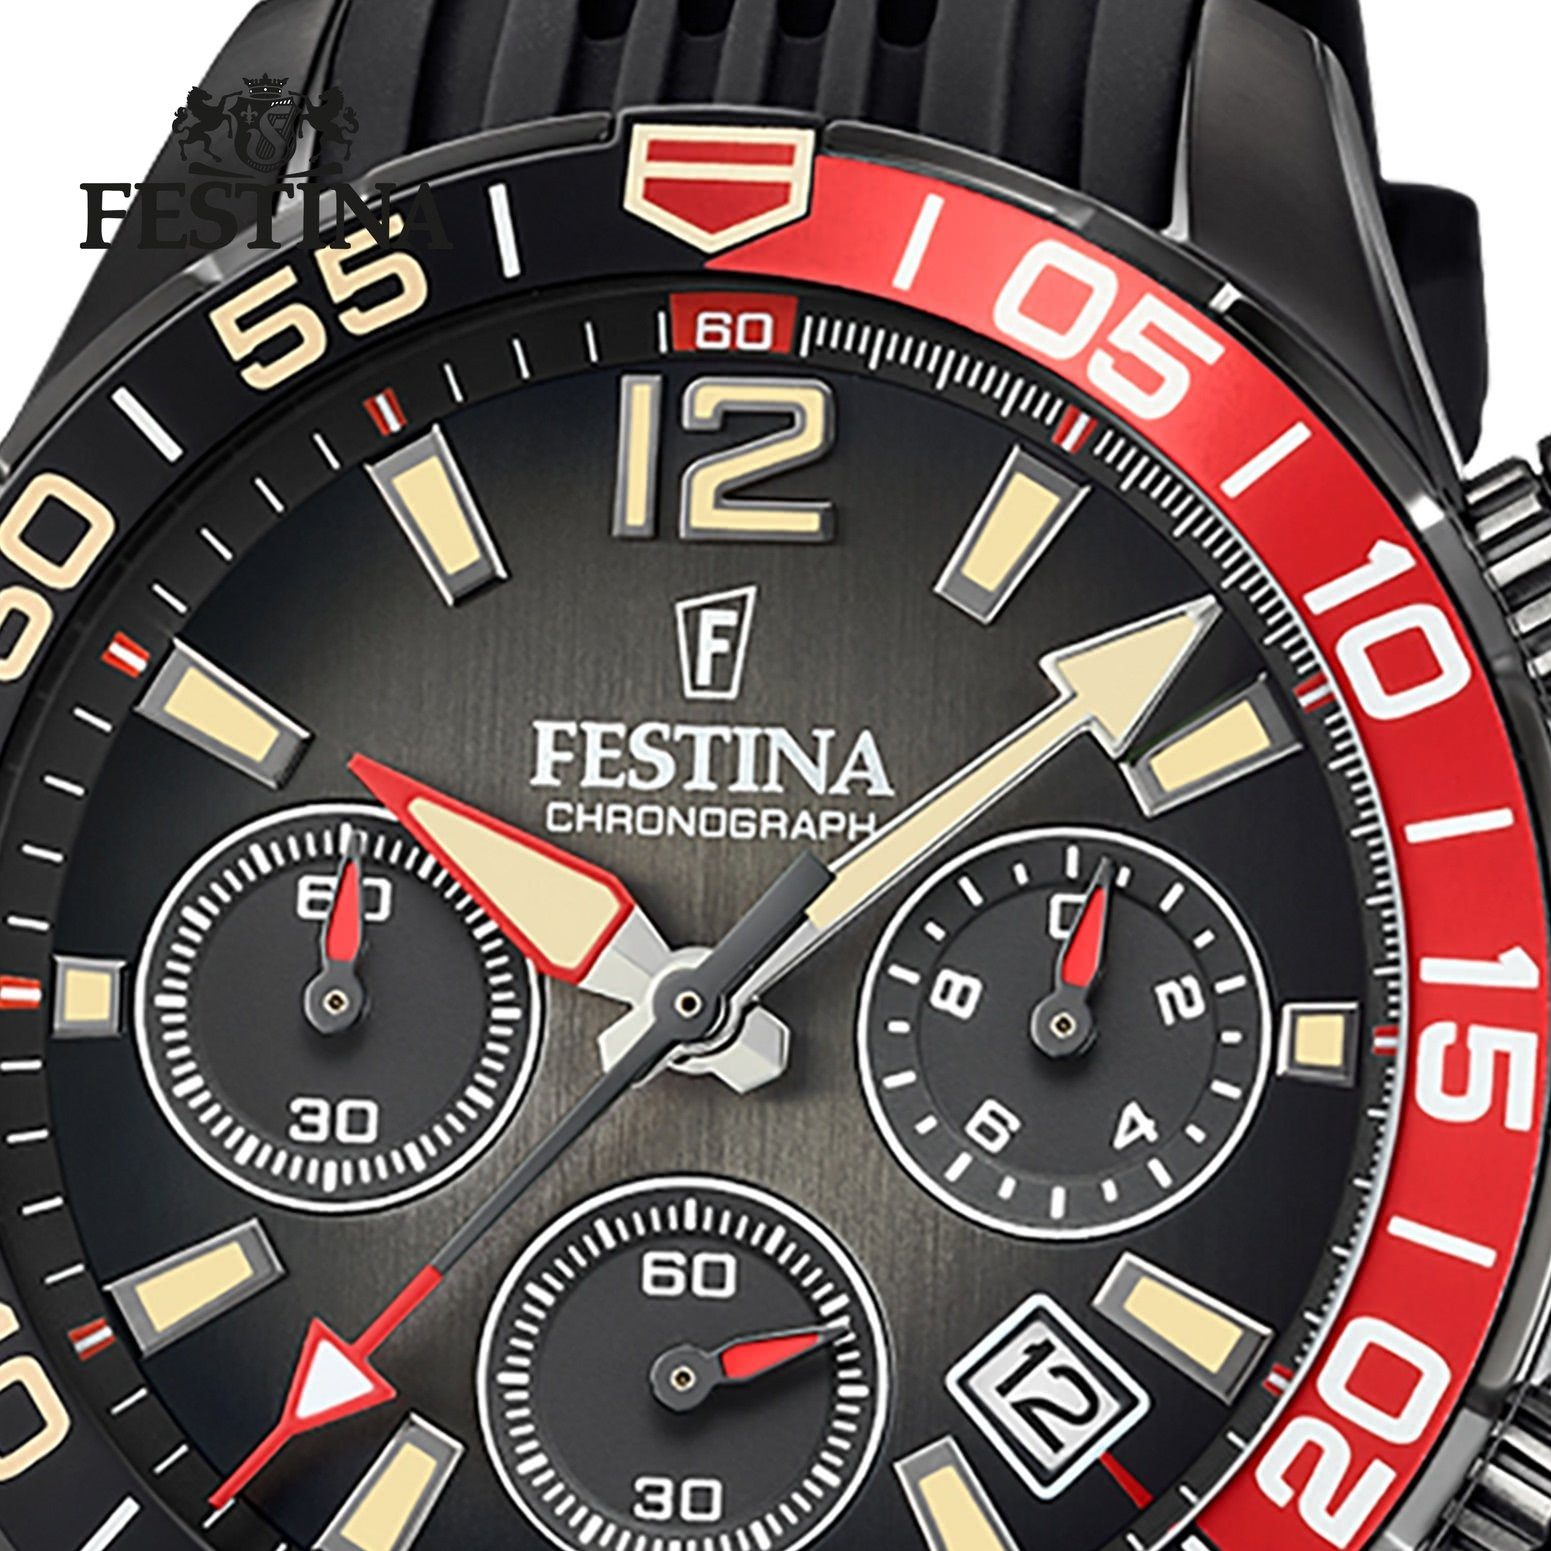 Festina Festina F20518/3 Herren Silikonarmband Herren Uhr Quarzuhr Silikonband, Armbanduhr schwarz, Sport rund,